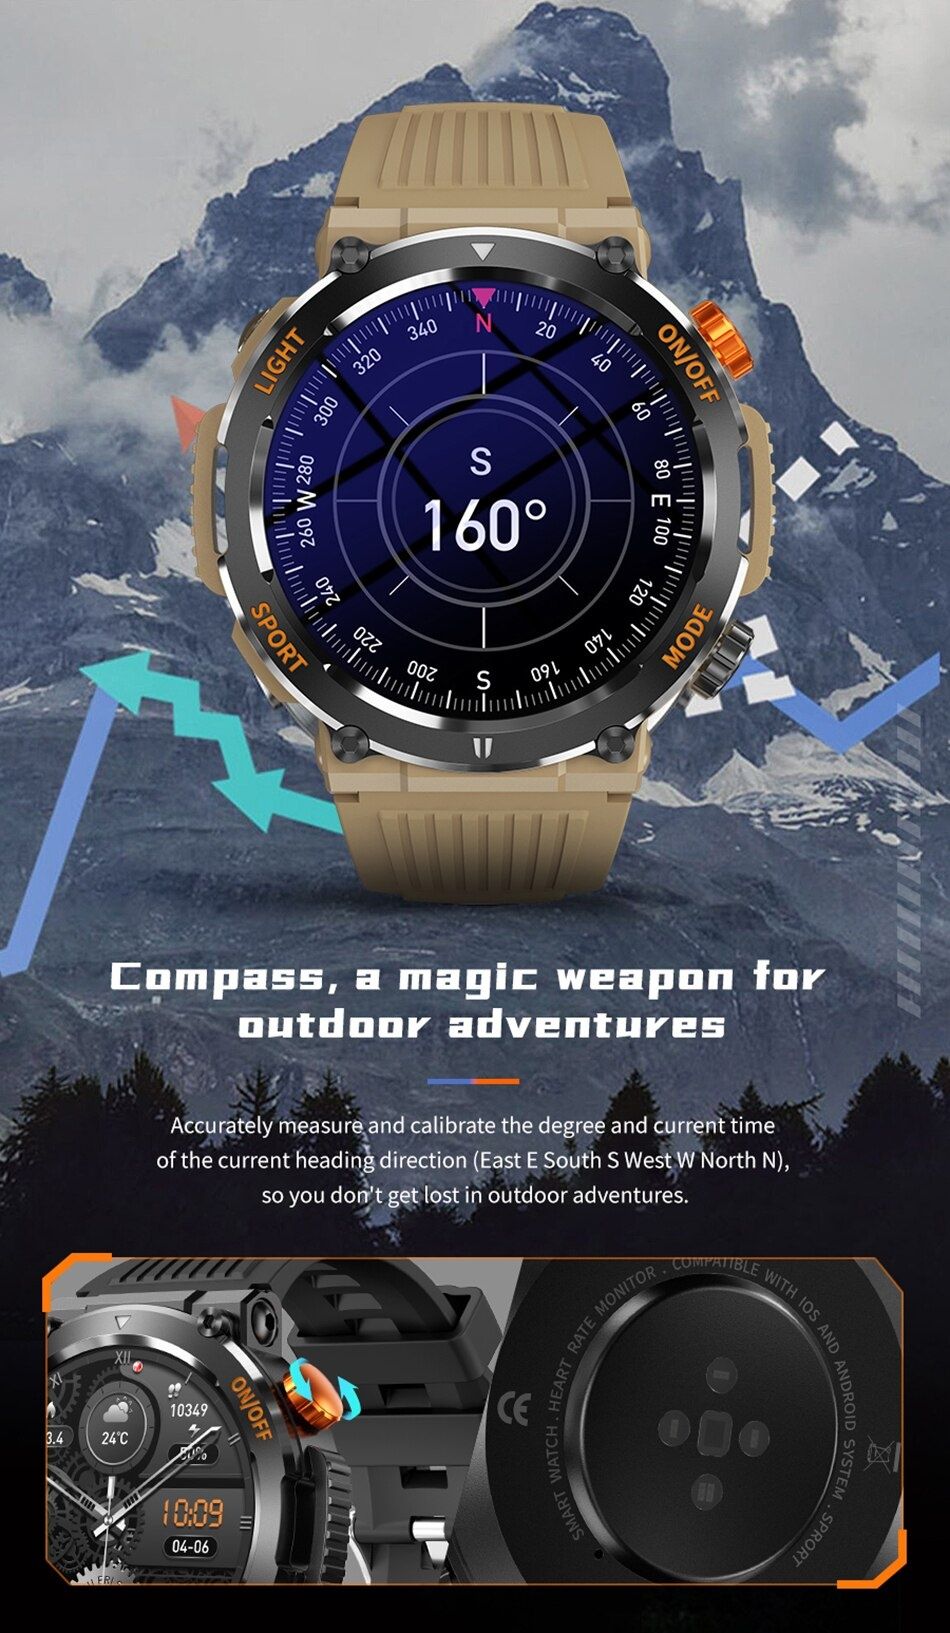 Смарт часи LIFE, Smart watch,  умные часы 1,46, 450 мАч, компас,фитнес